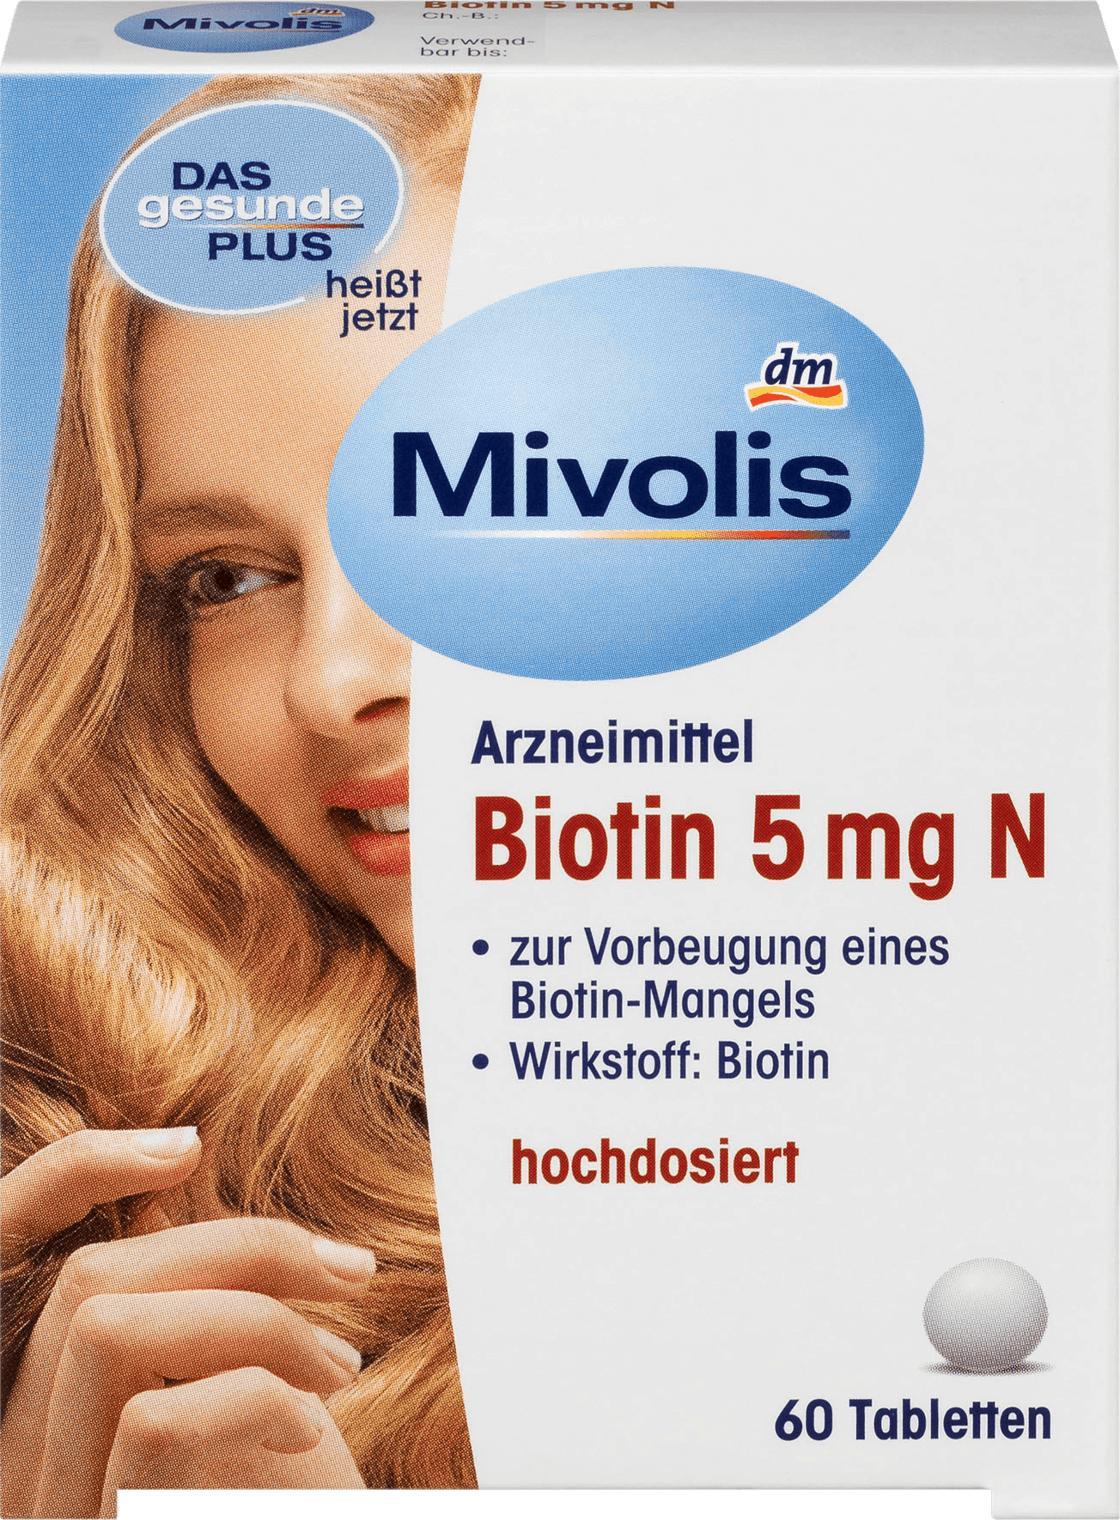 Отзыв на Biotin 5 mg N, Tabletten, 60 St из Интернет-Магазина DM